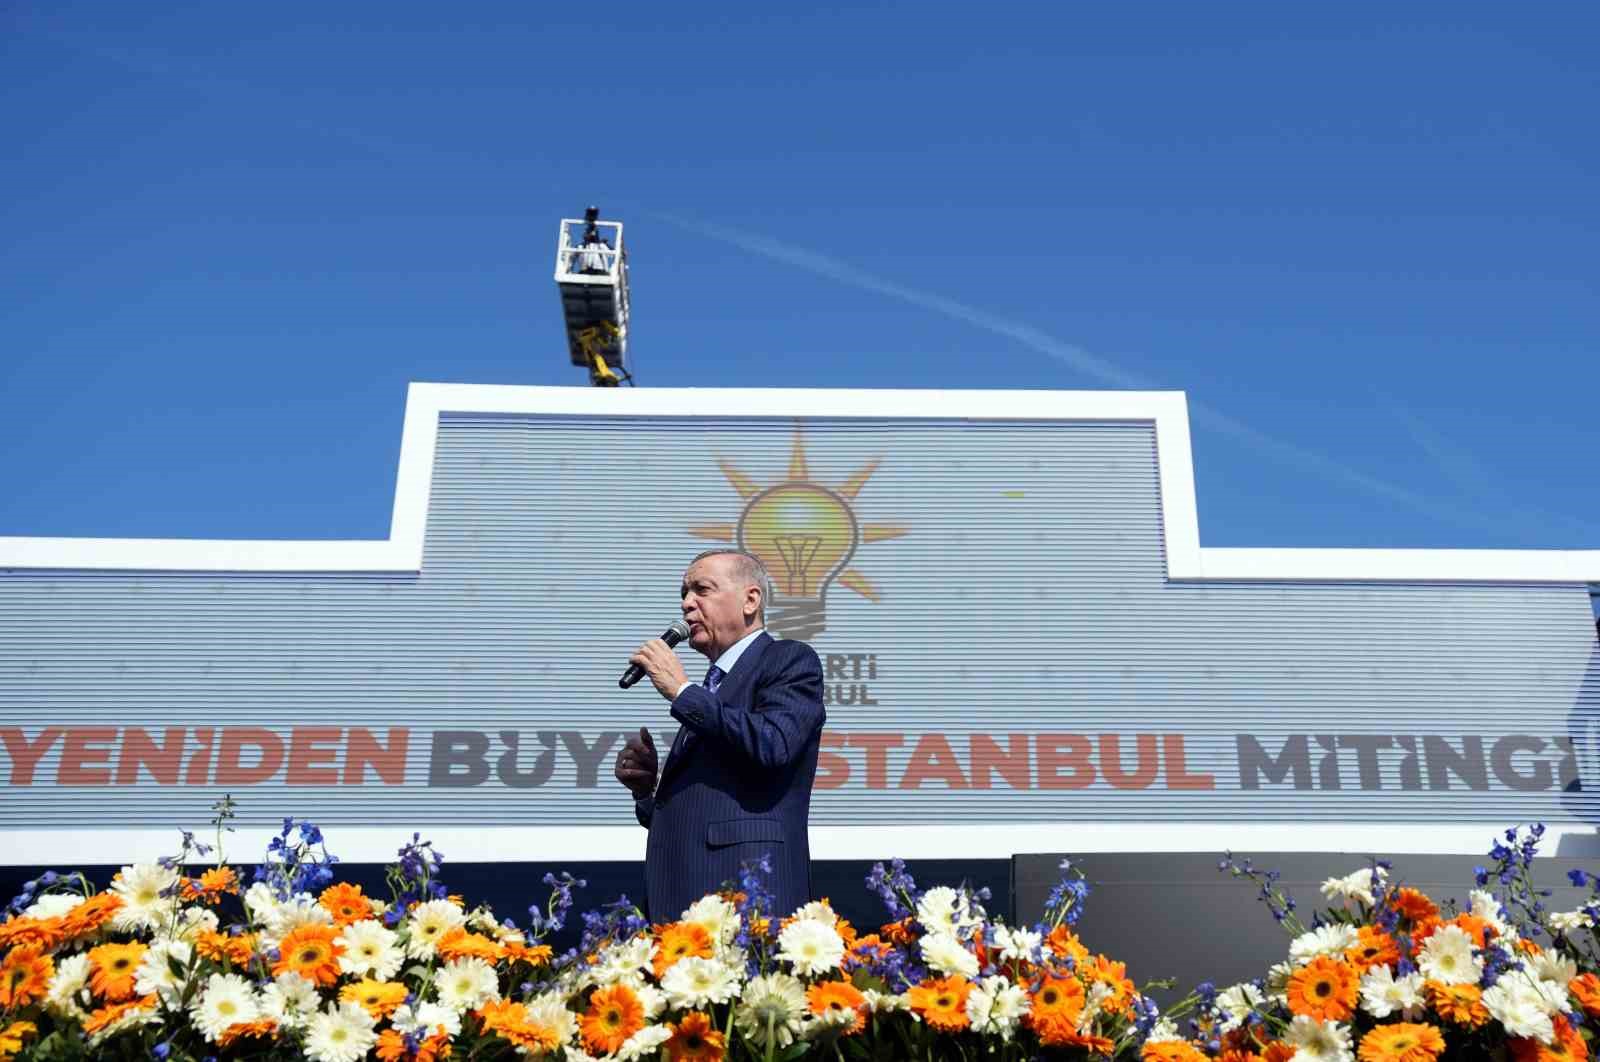 cumhurbaskani erdogan murat kurum ile istanbulda yeni bir donemi baslatacagiz 8 QTrefkn7